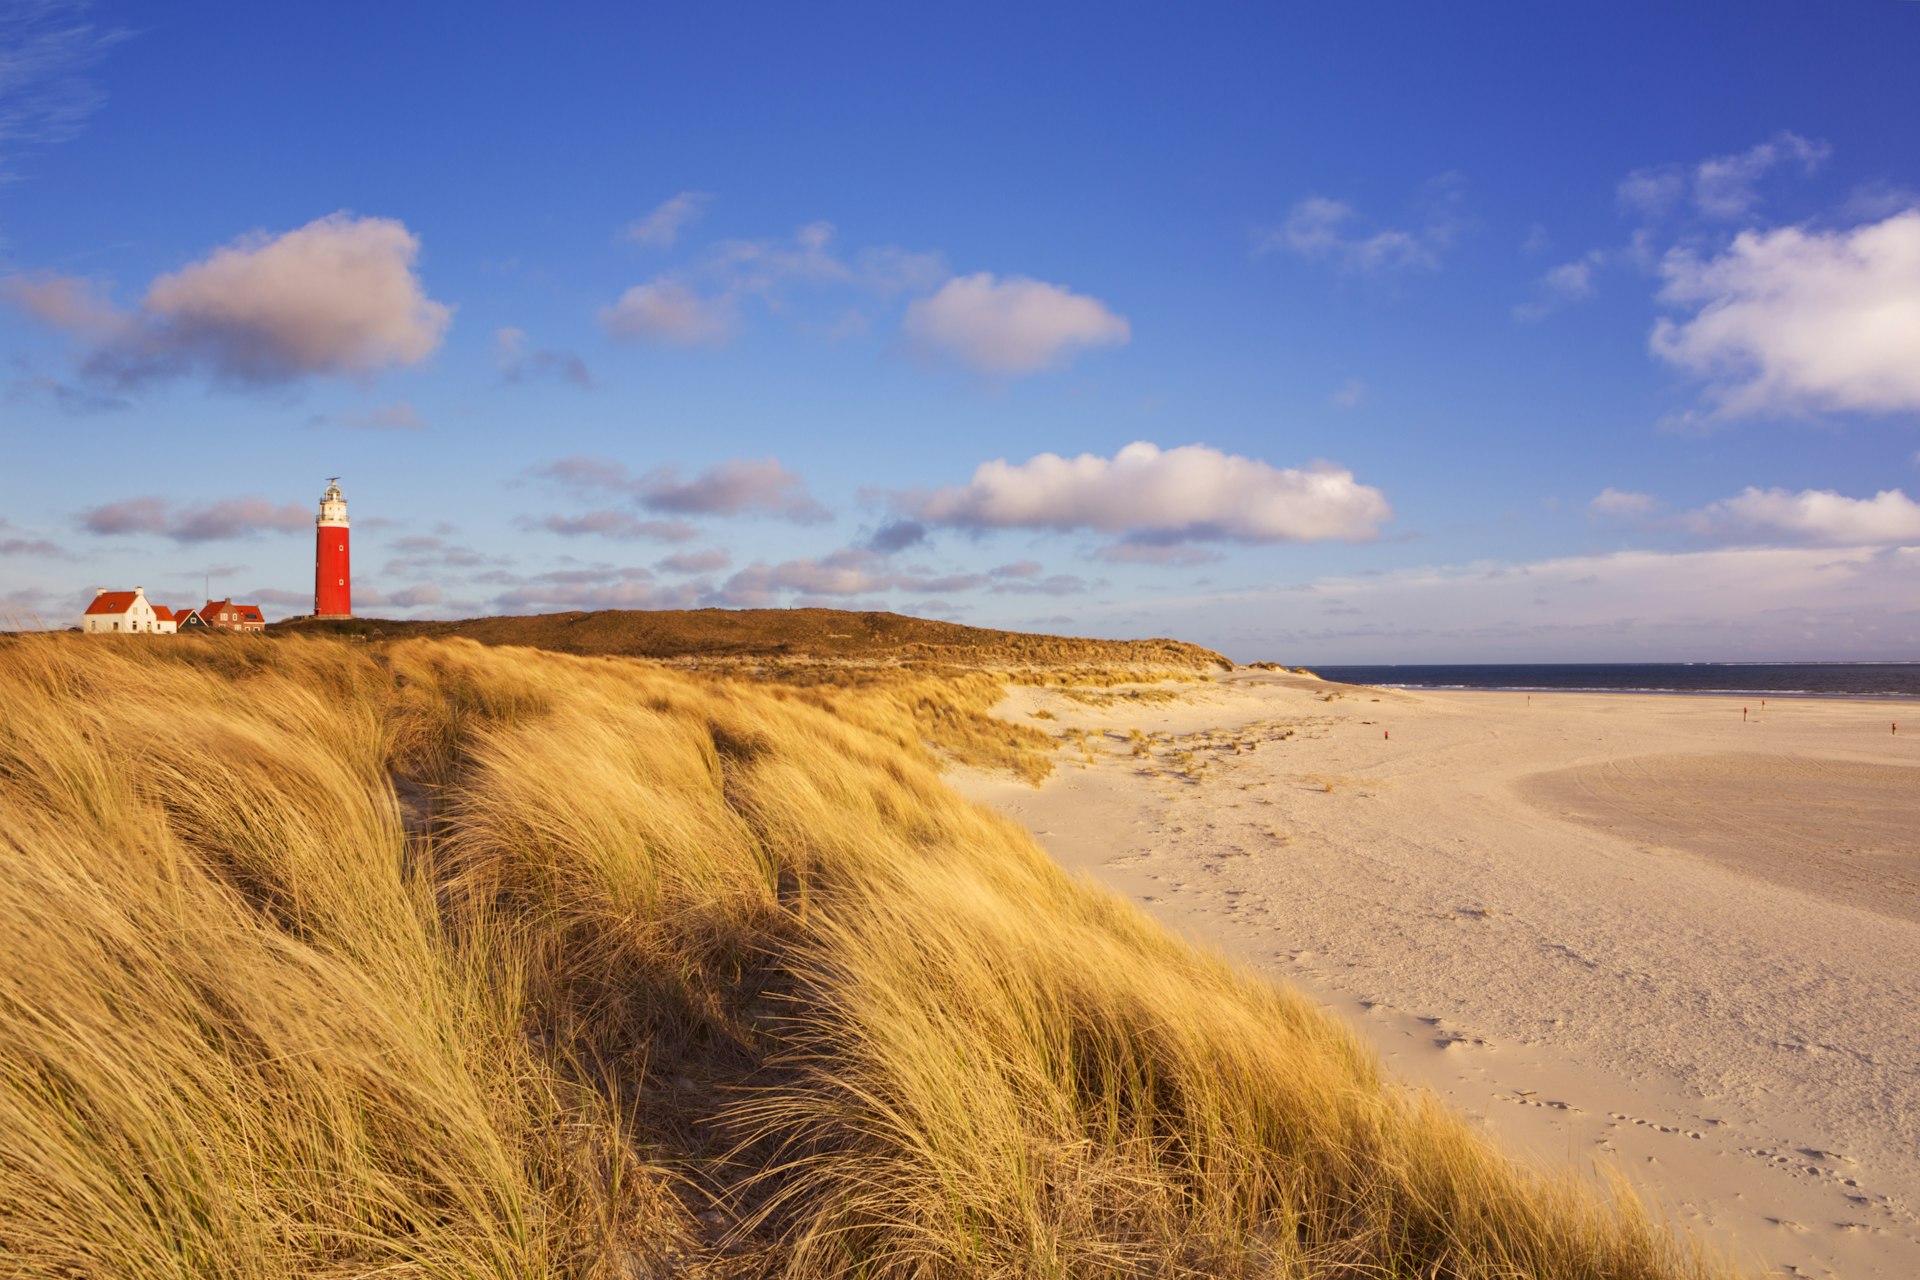 Texel Lighthouse near a sandy beach during the early morning.